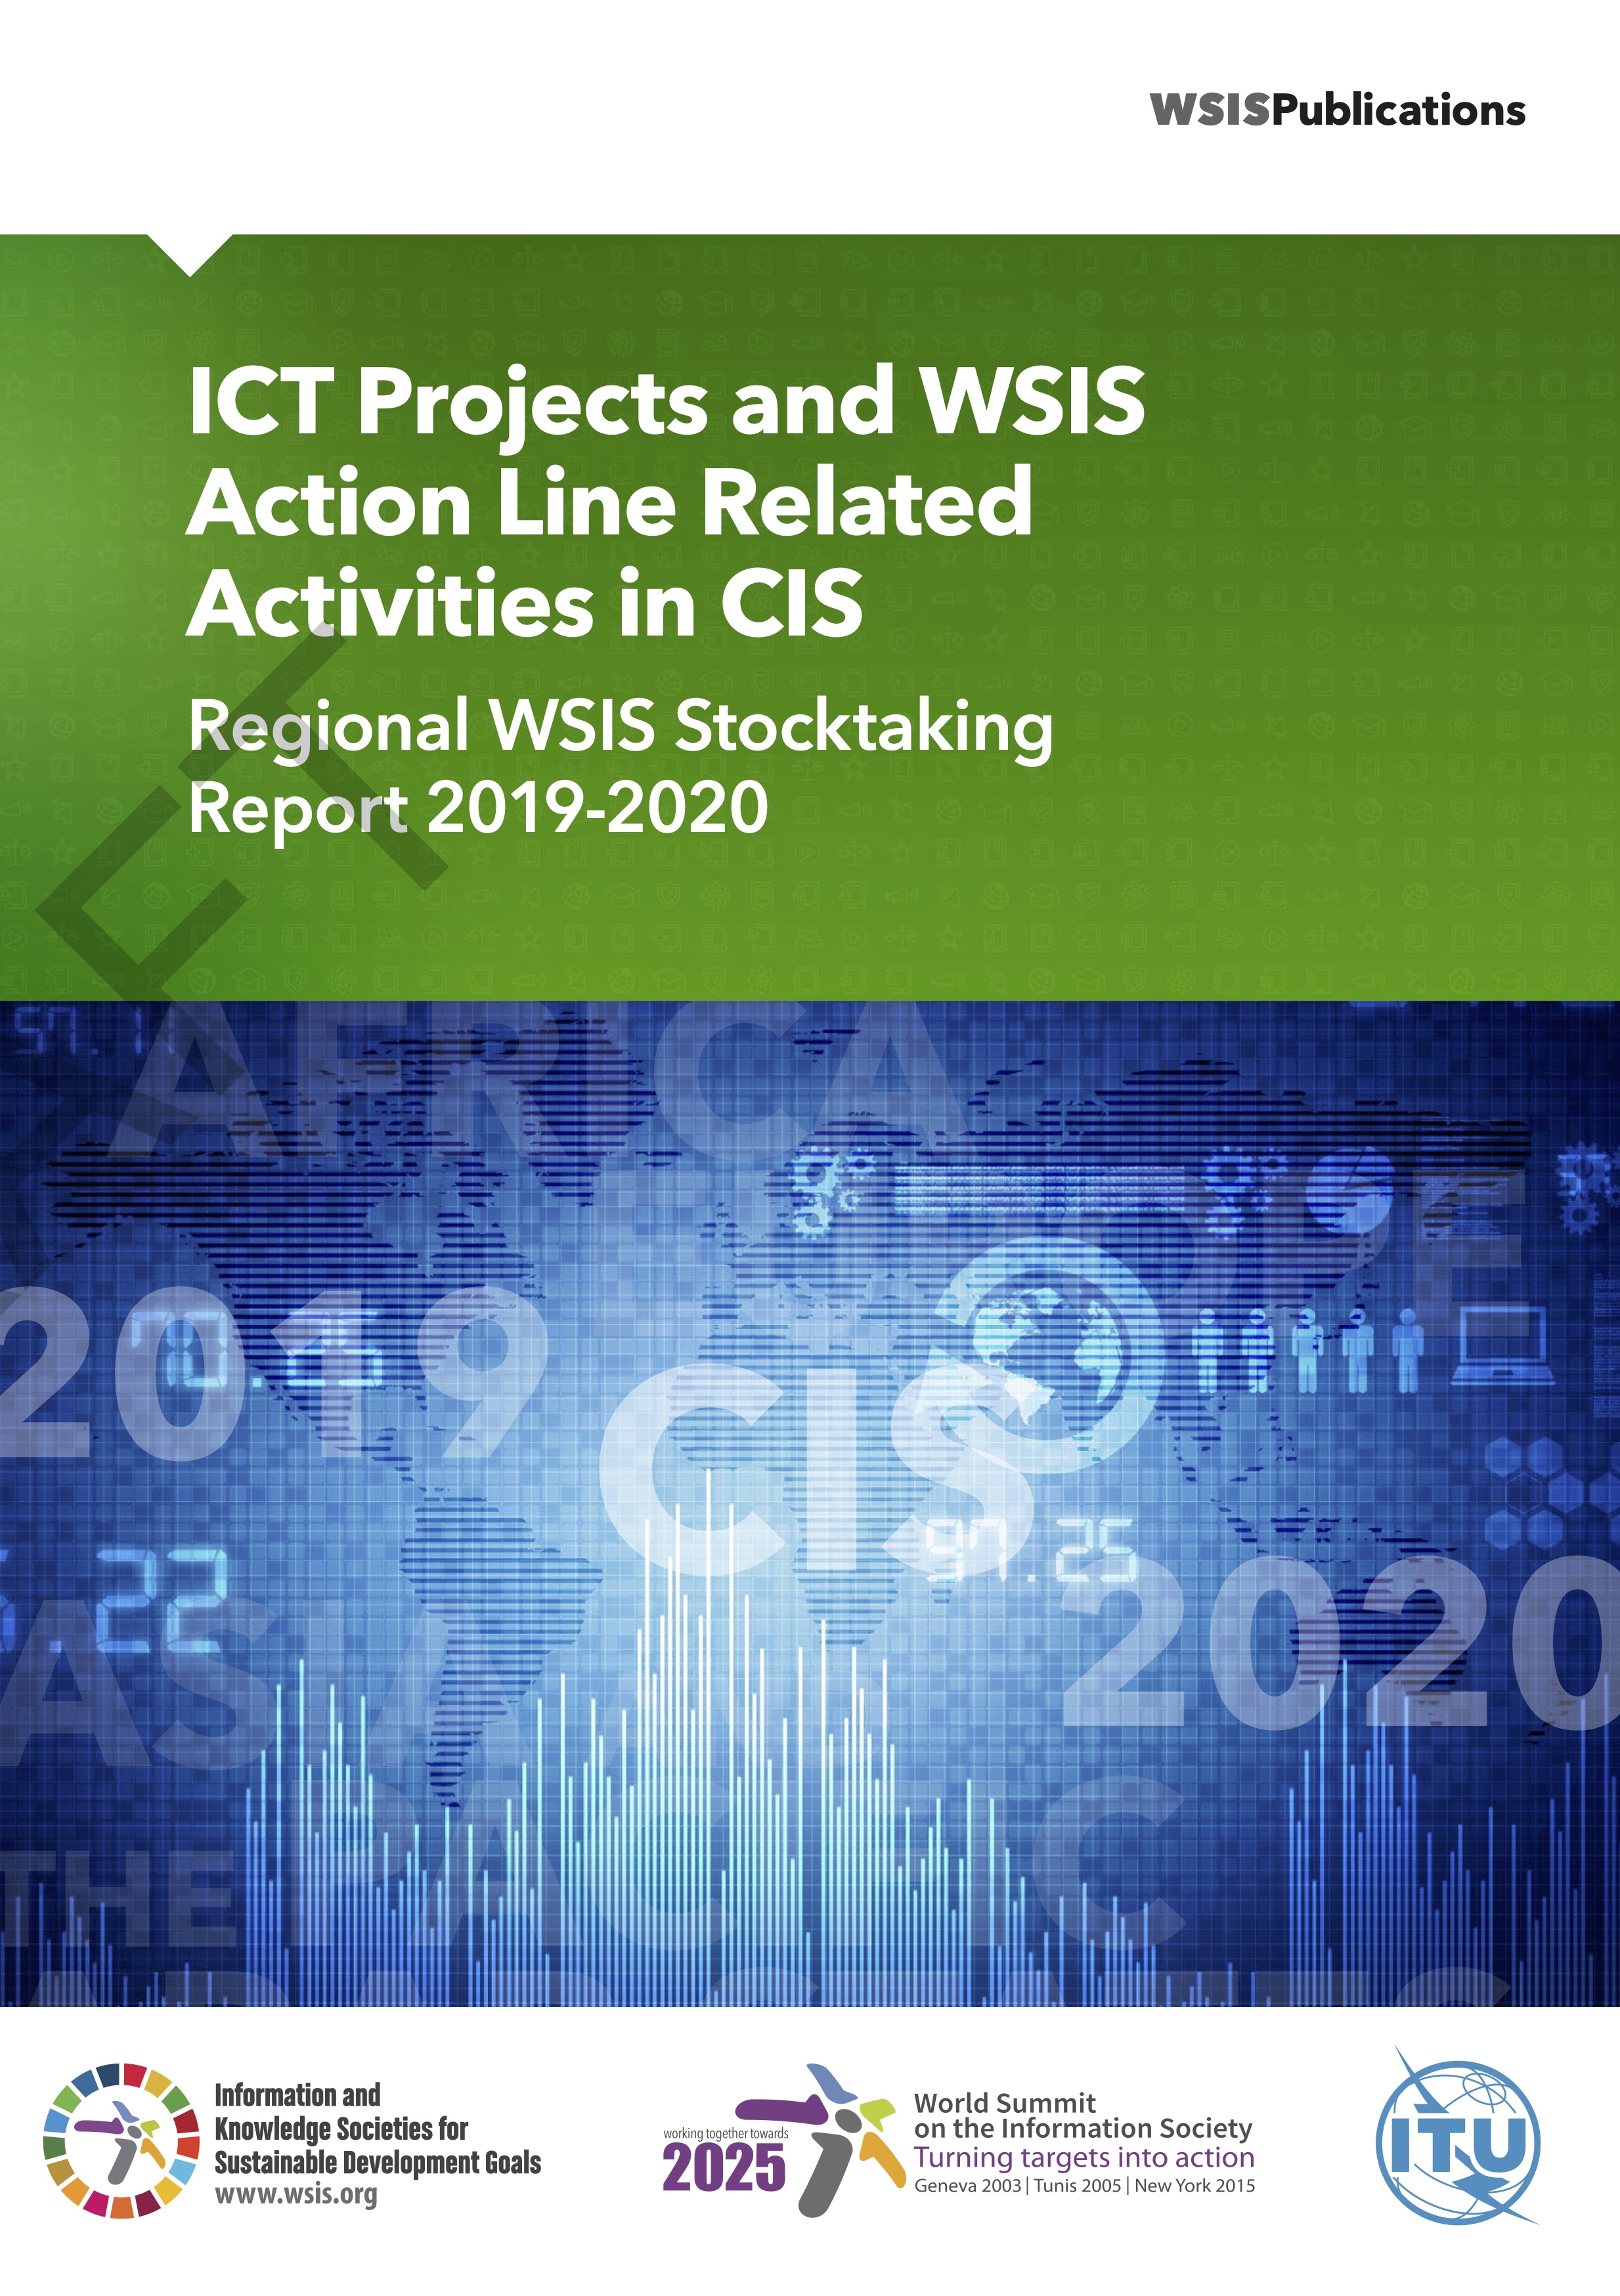 Regional WSIS Stocktaking Report 2019-2020 — CIS